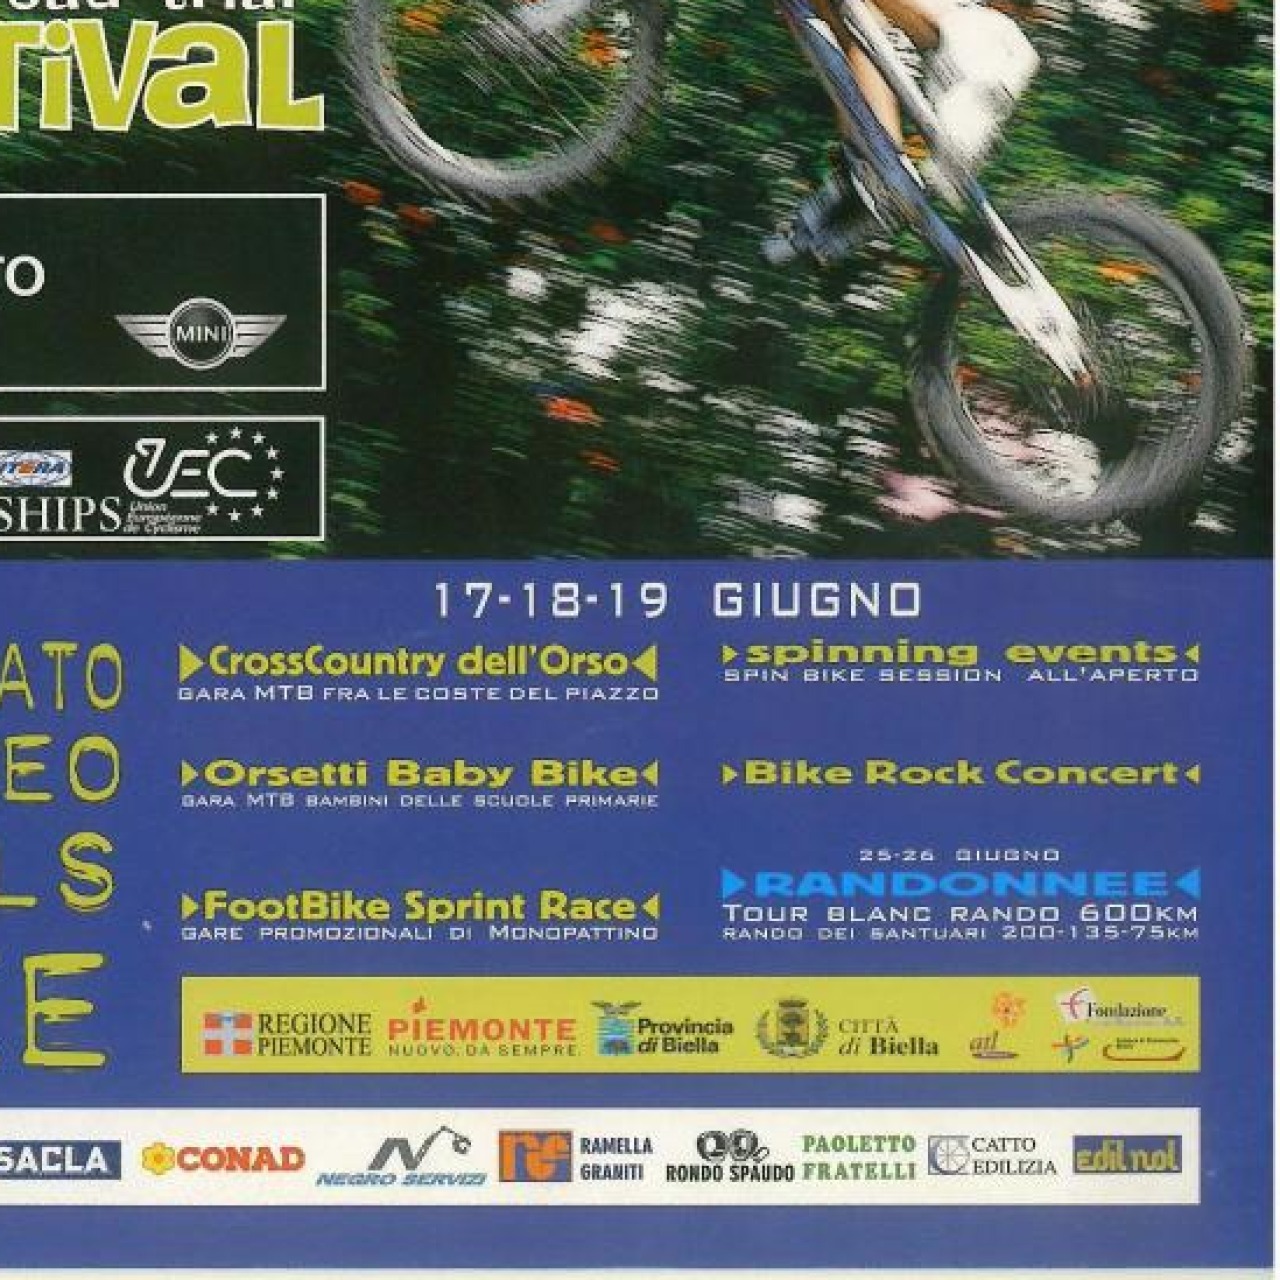 Ramella Graniti Biella bike festival